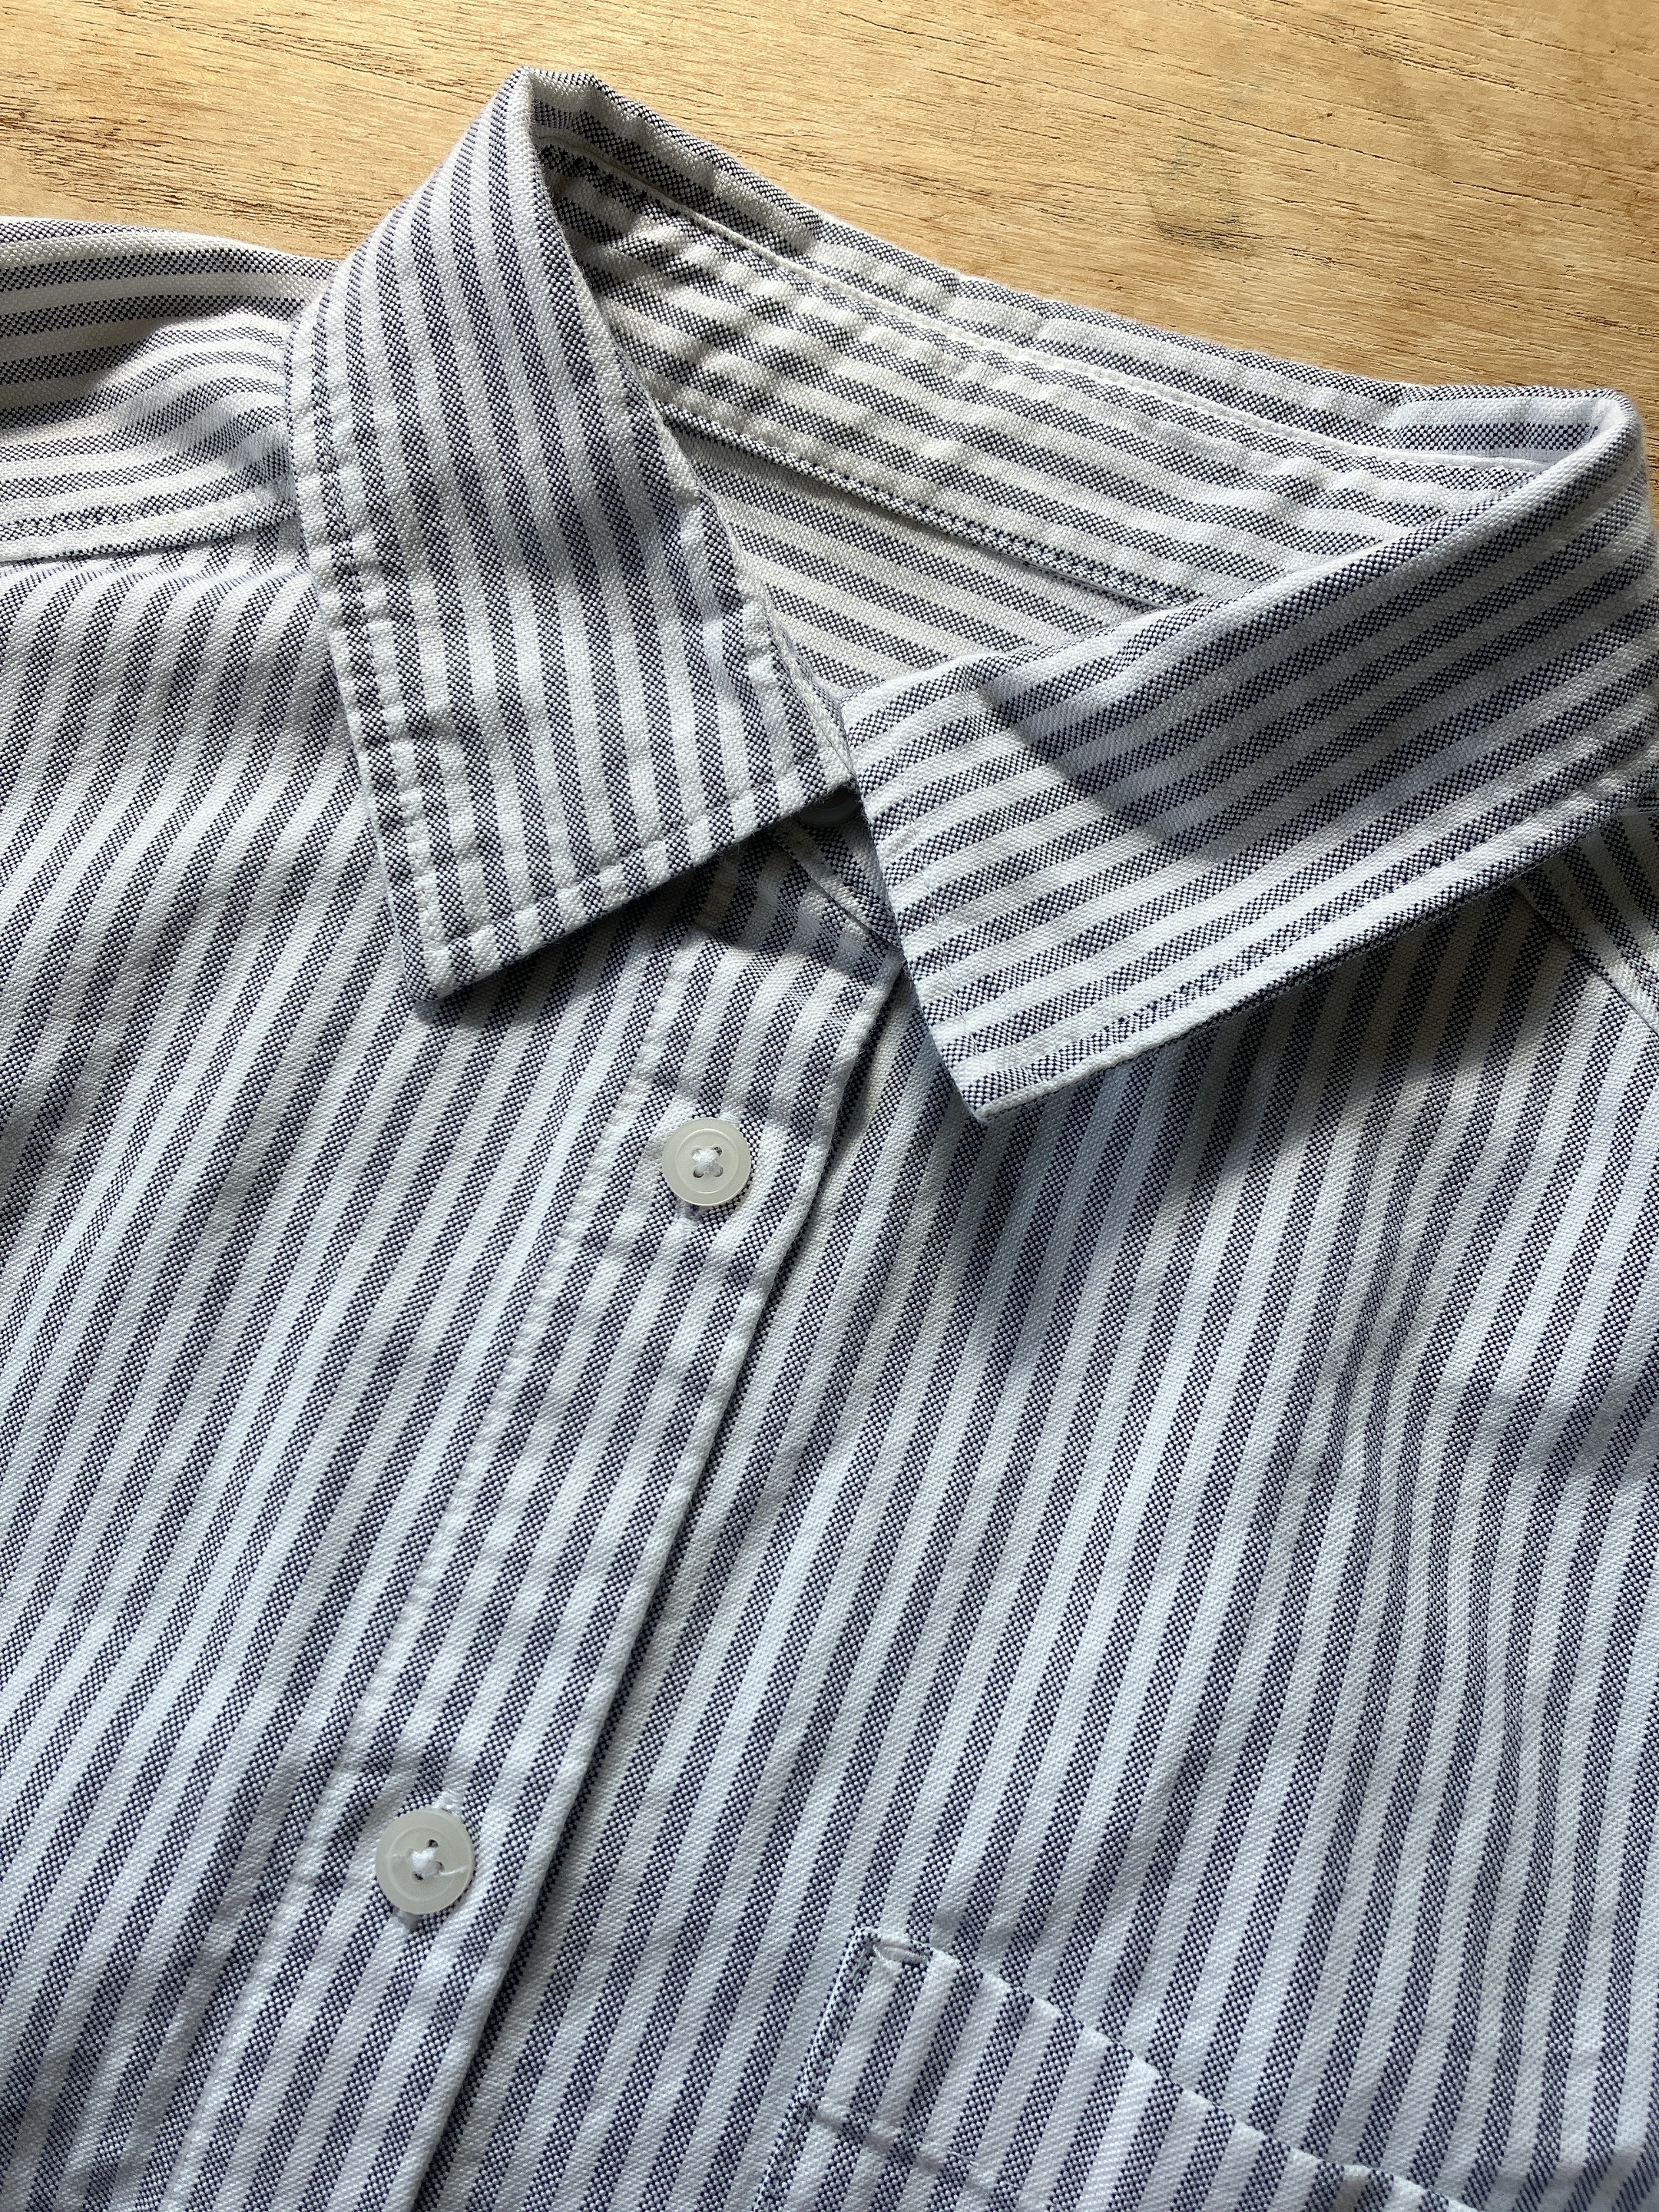 GU（ジーユー）のおすすめシャツ「オックスフォードショートシャツ（長袖）（ストライプ）+E」